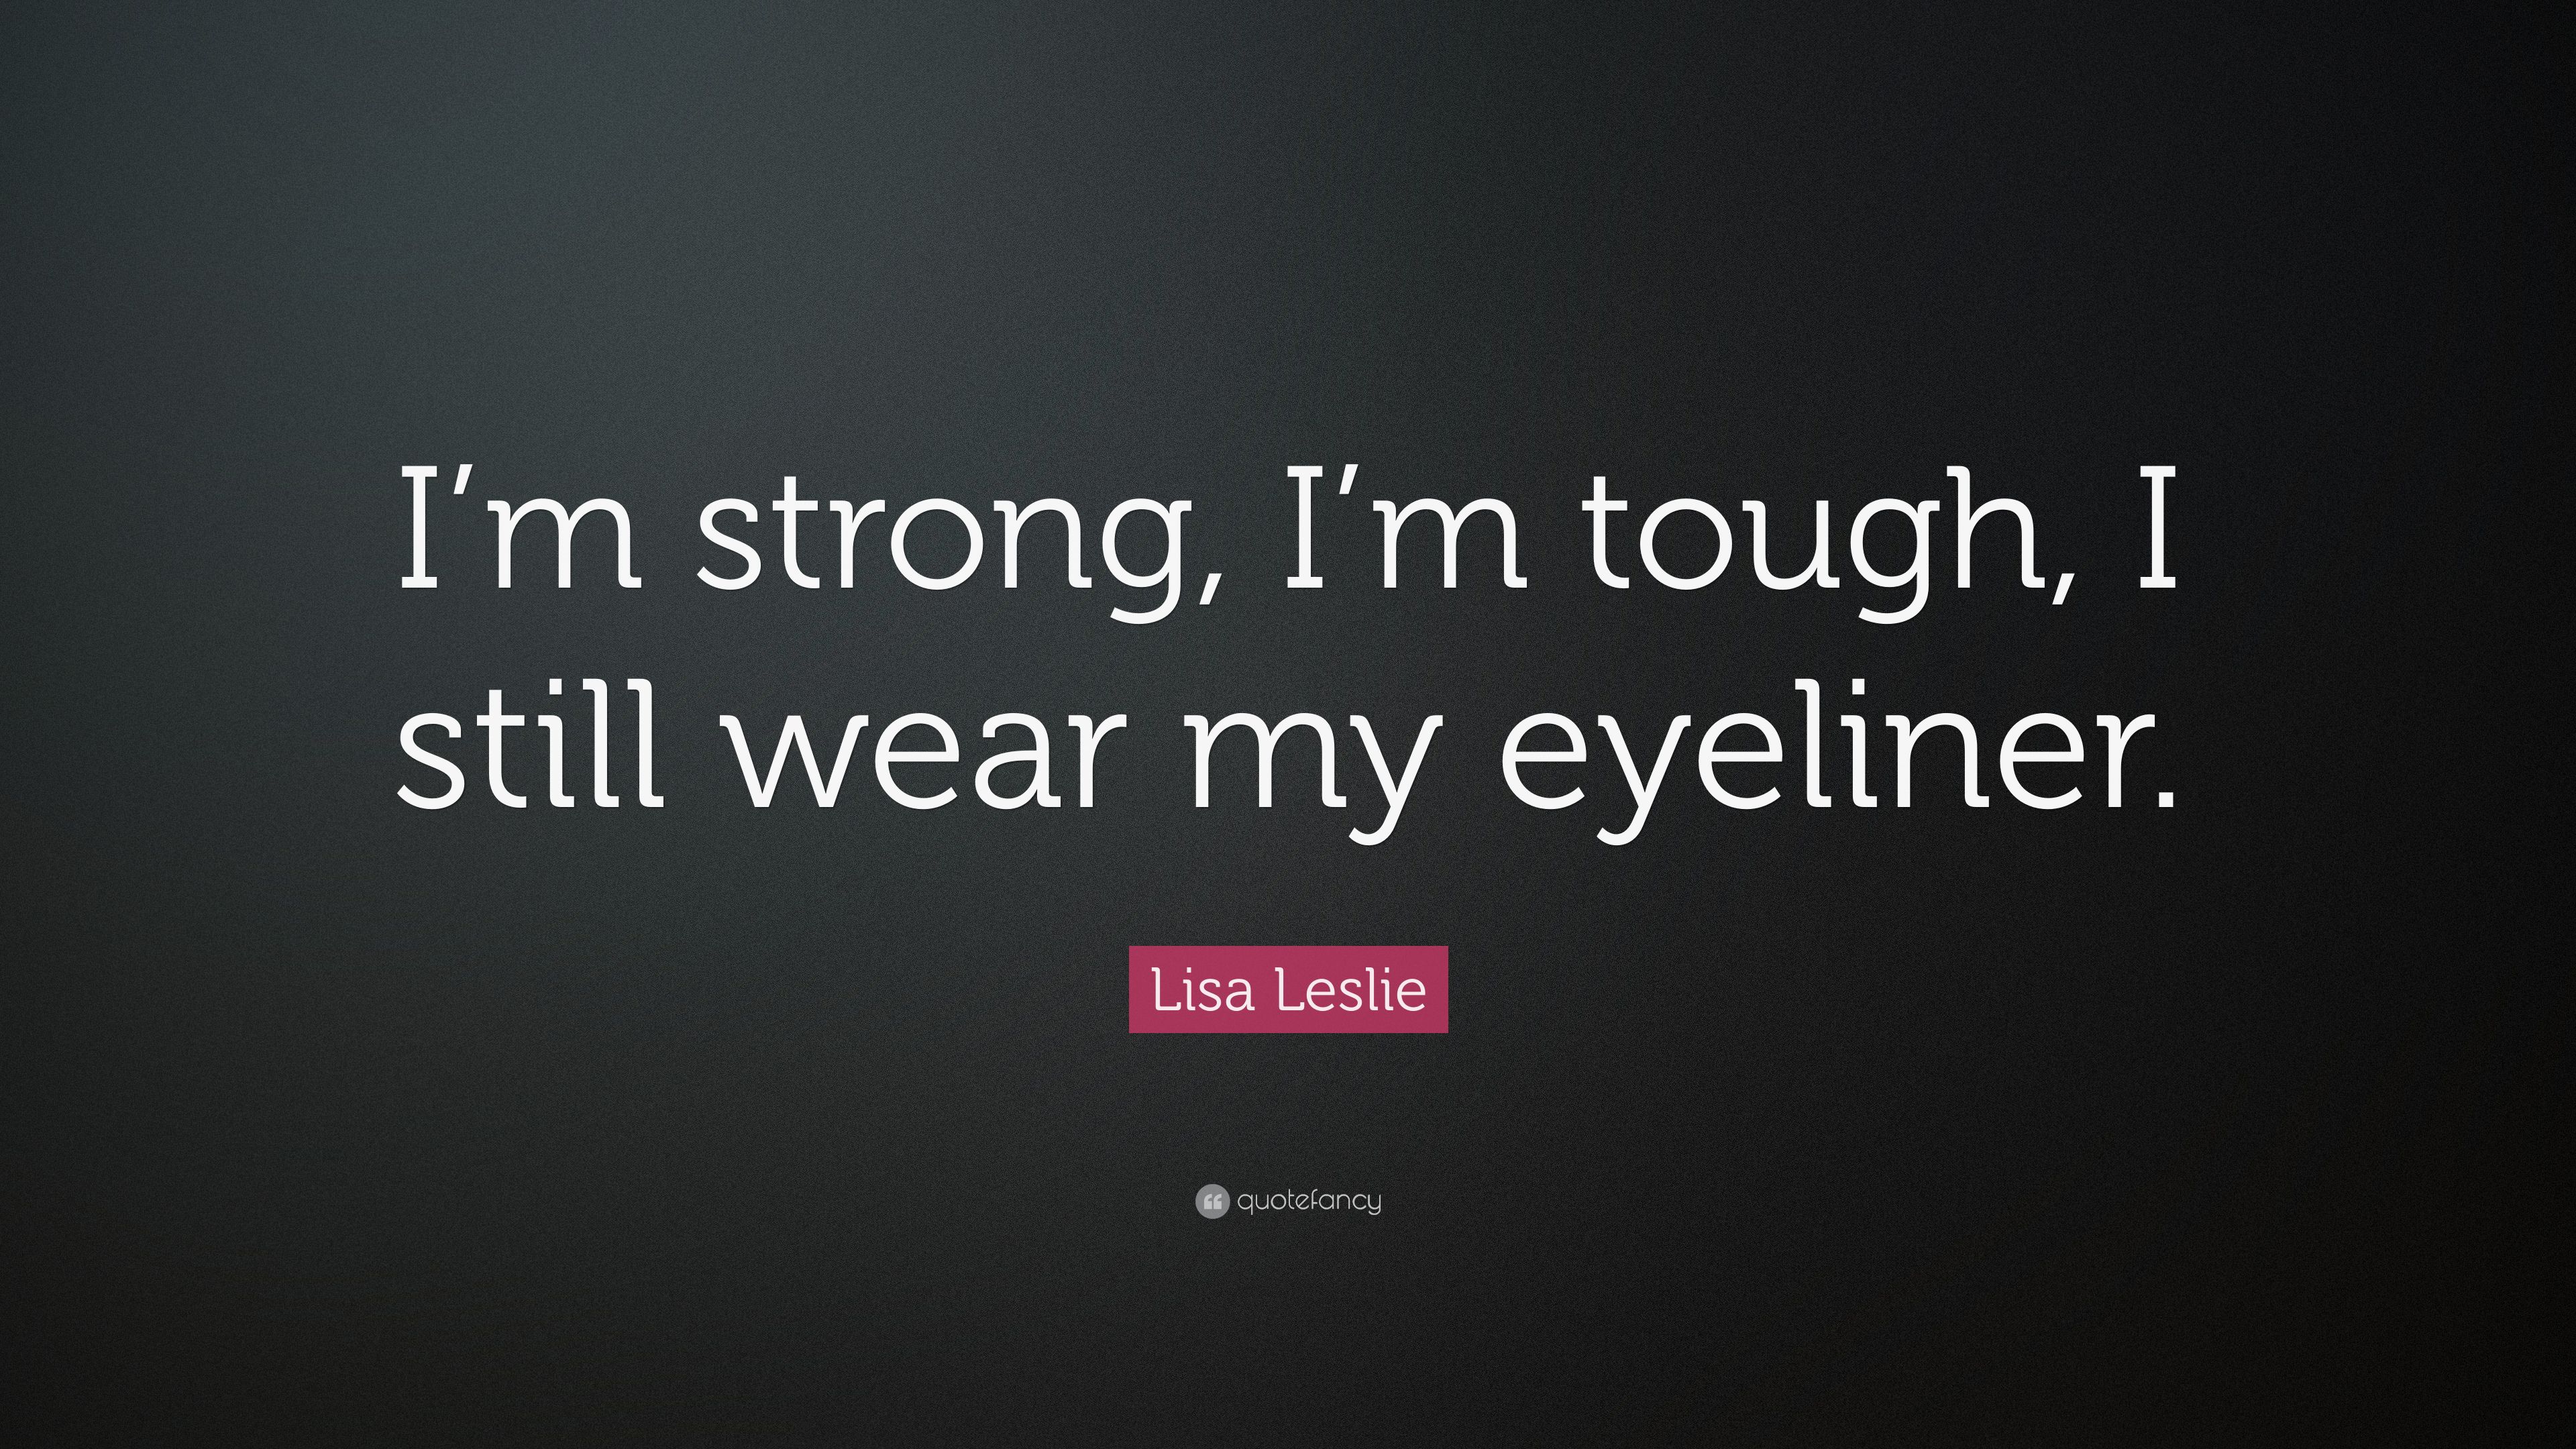 Lisa Leslie Quote: “I'm strong, I'm tough, I still wear my eyeliner